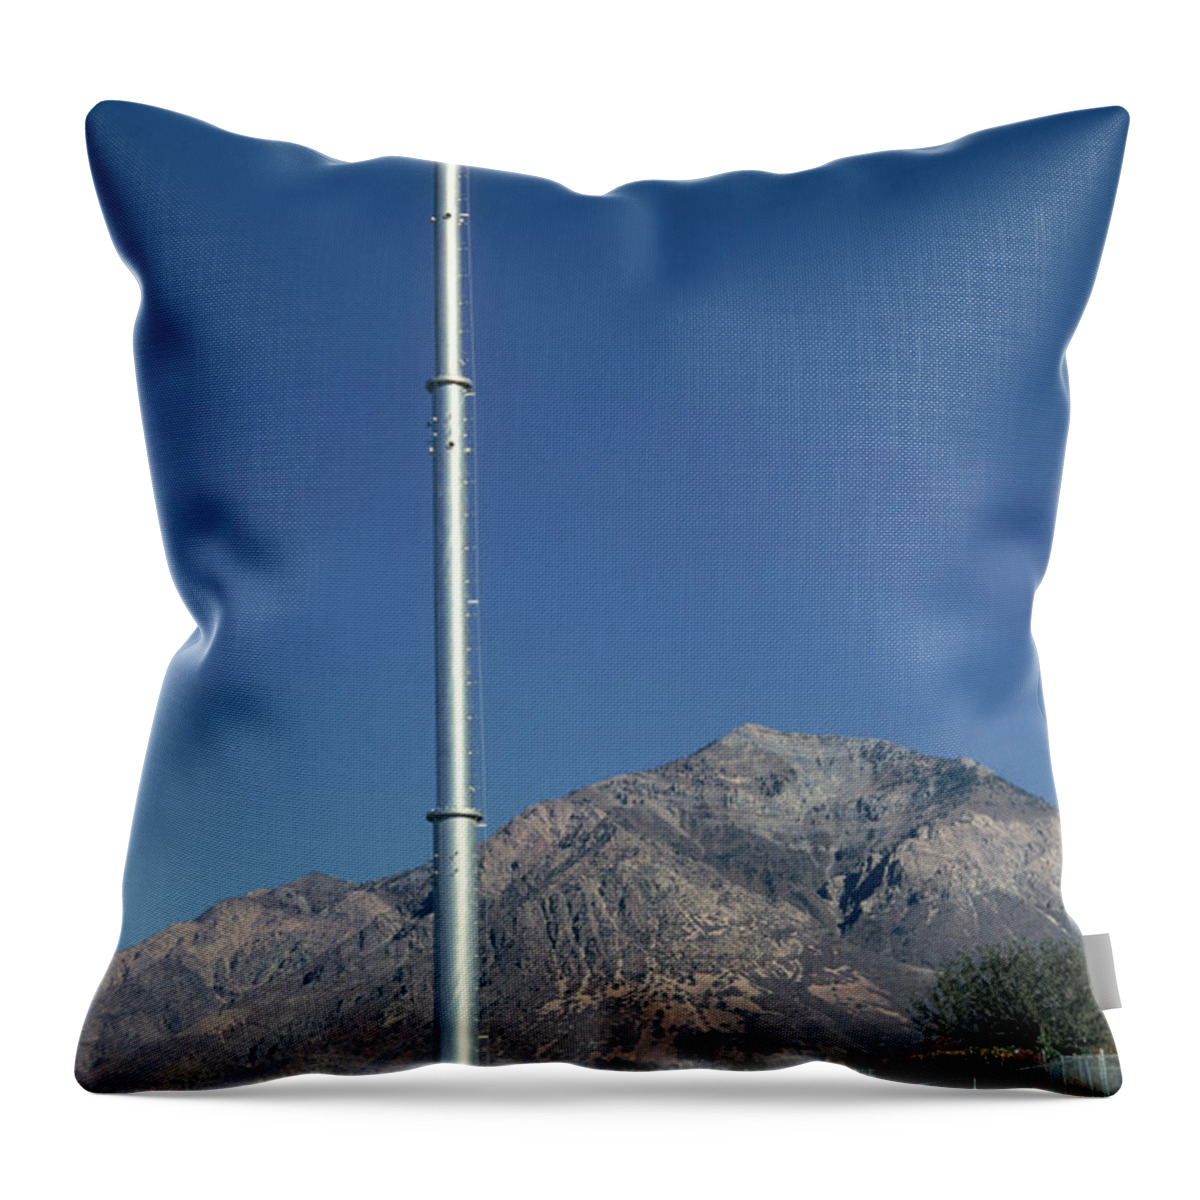 Antenna Throw Pillow featuring the photograph Cellular Telephone Tower by Robert J. Erwin